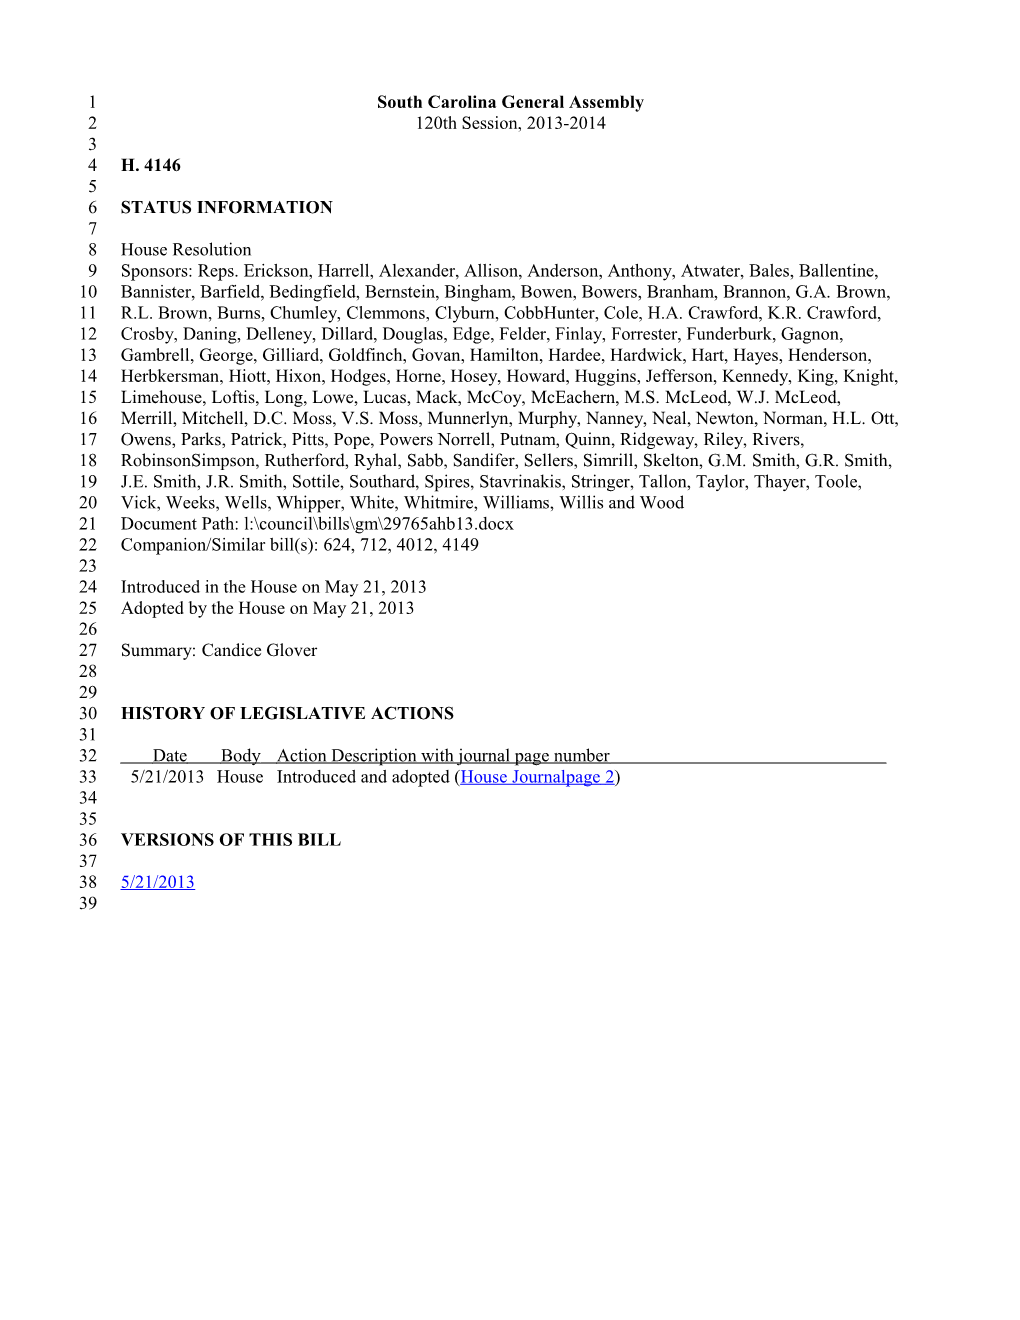 2013-2014 Bill 4146: Candice Glover - South Carolina Legislature Online